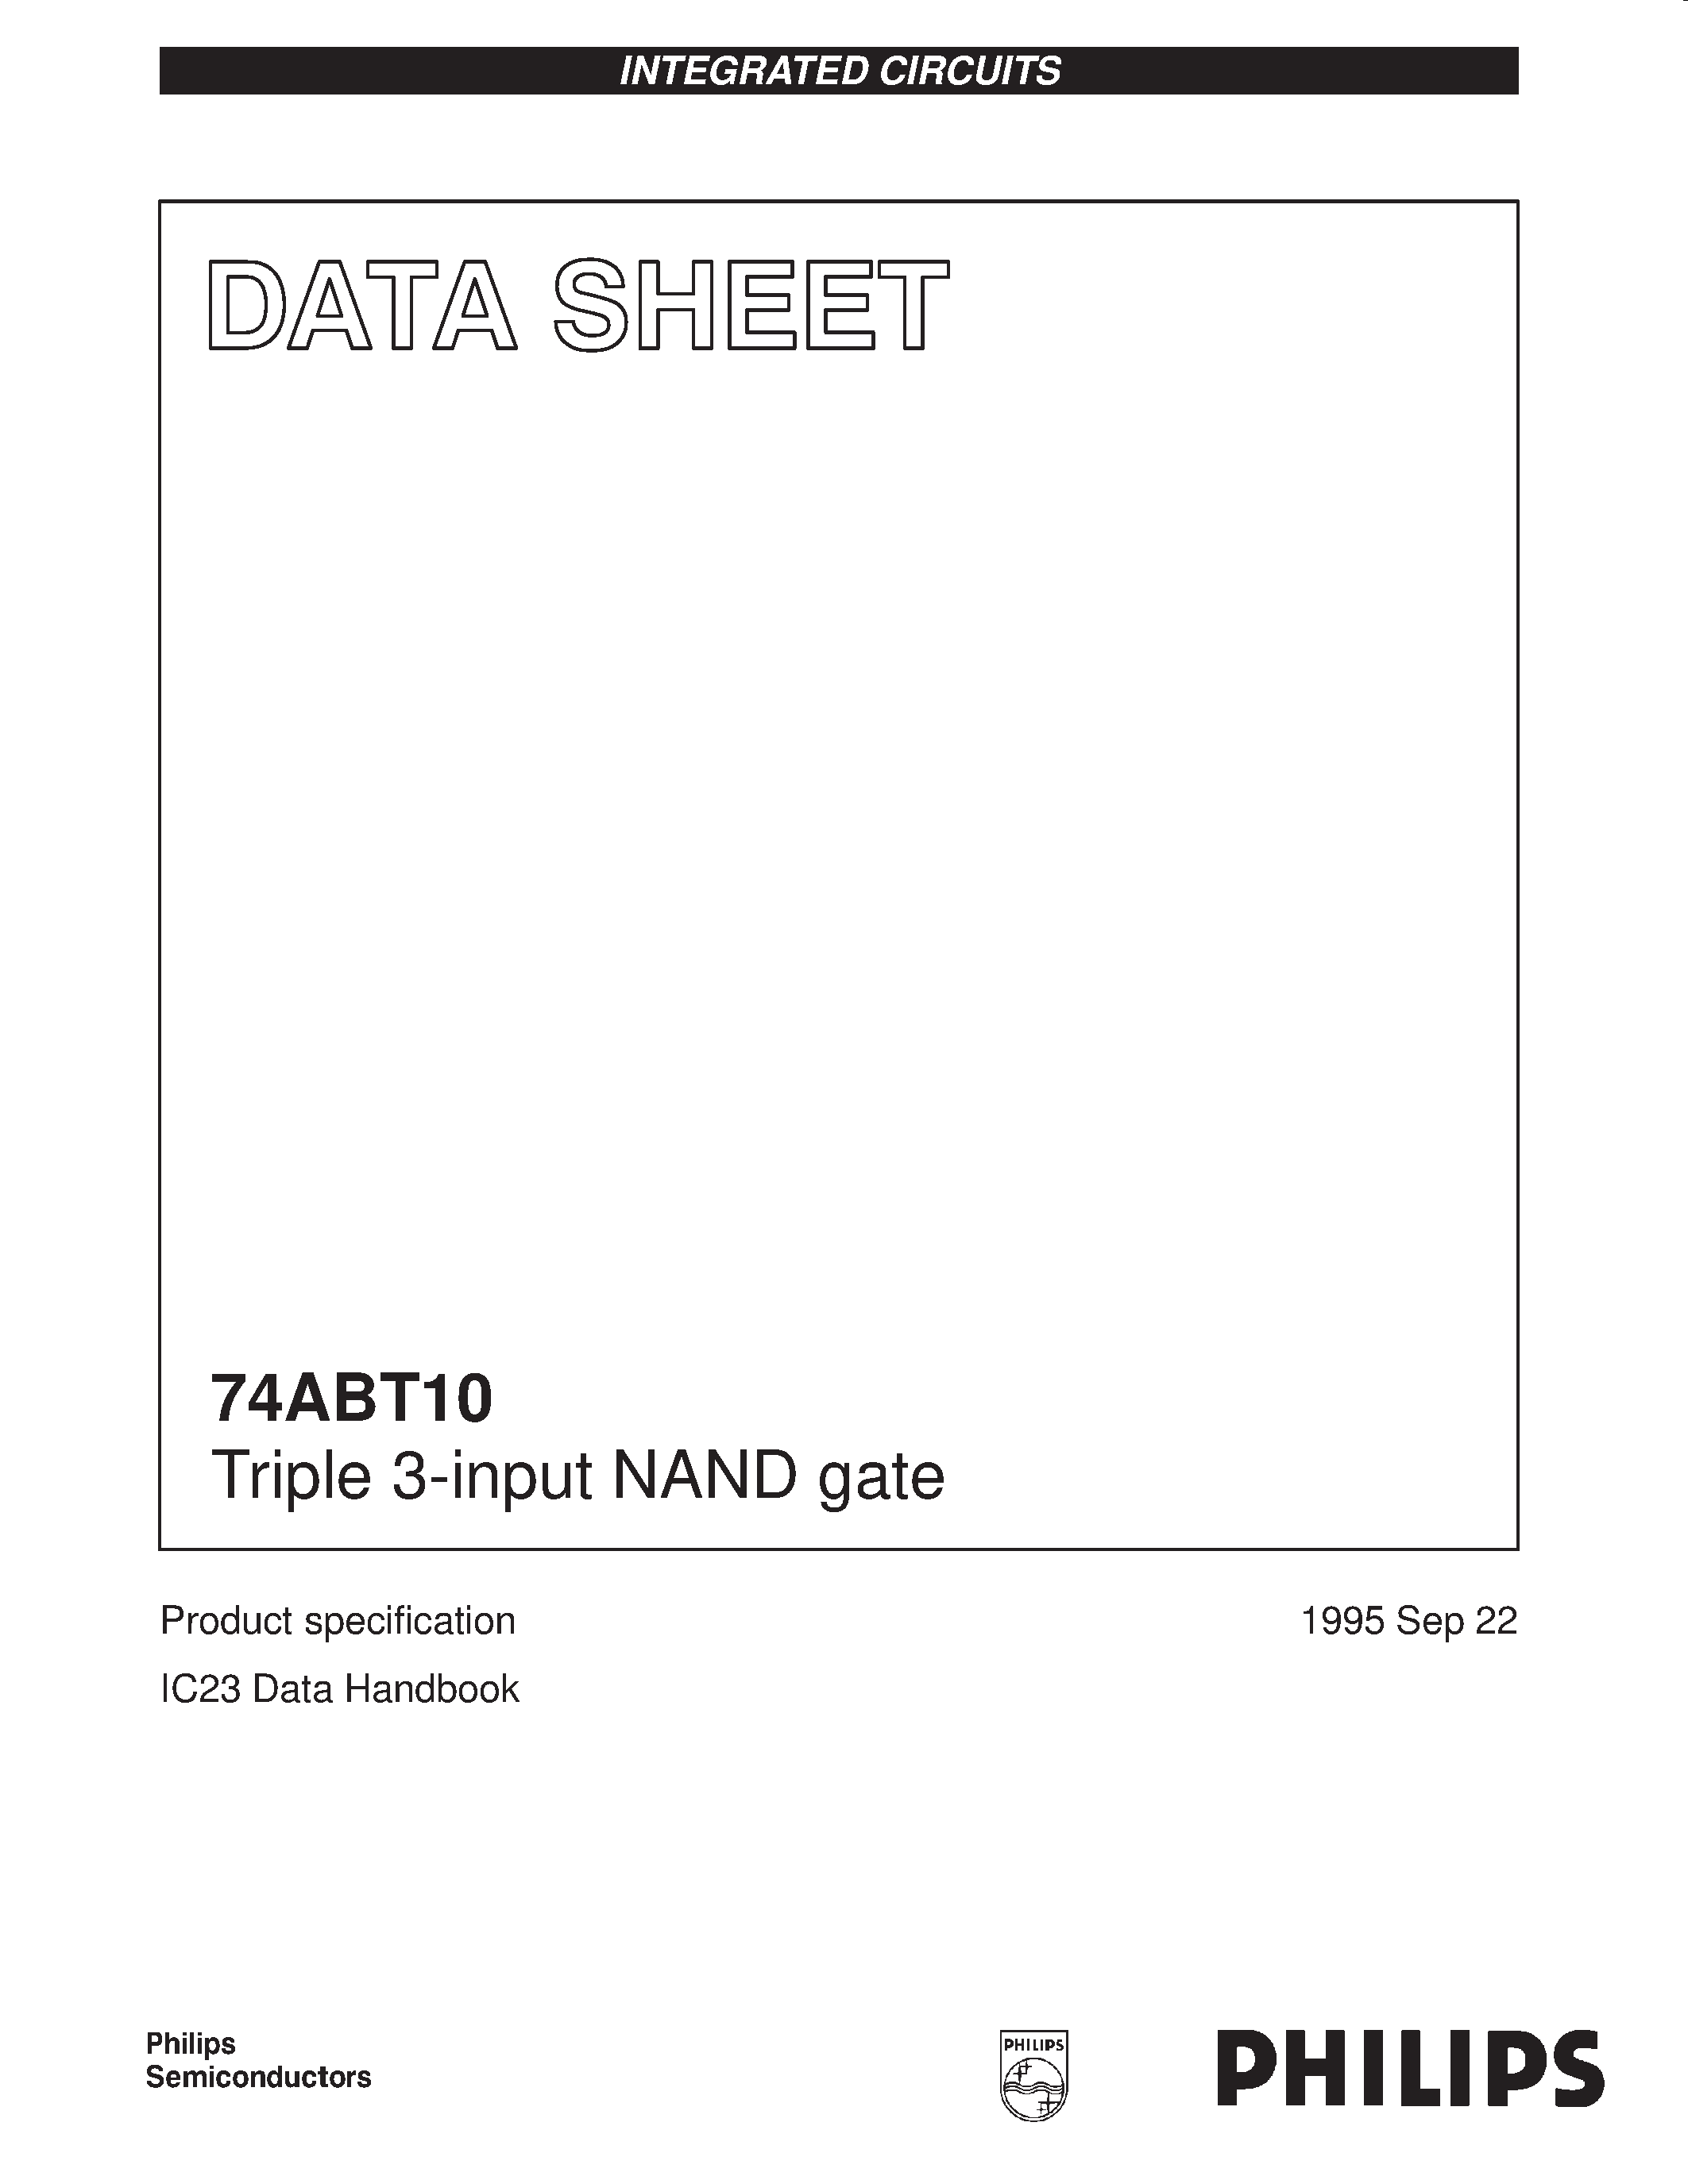 Даташит 74ABT10PWDH - Triple 3-input NAND gate страница 1